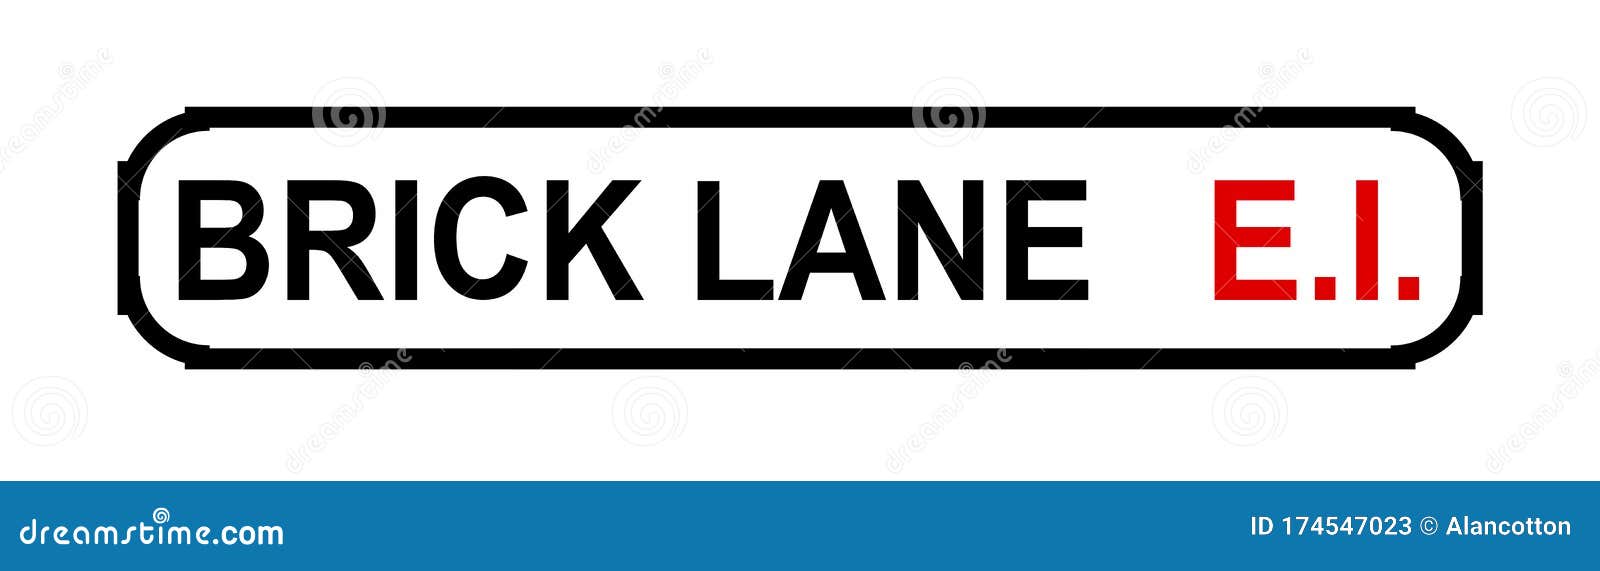 brick lane jack the ripper murder scene